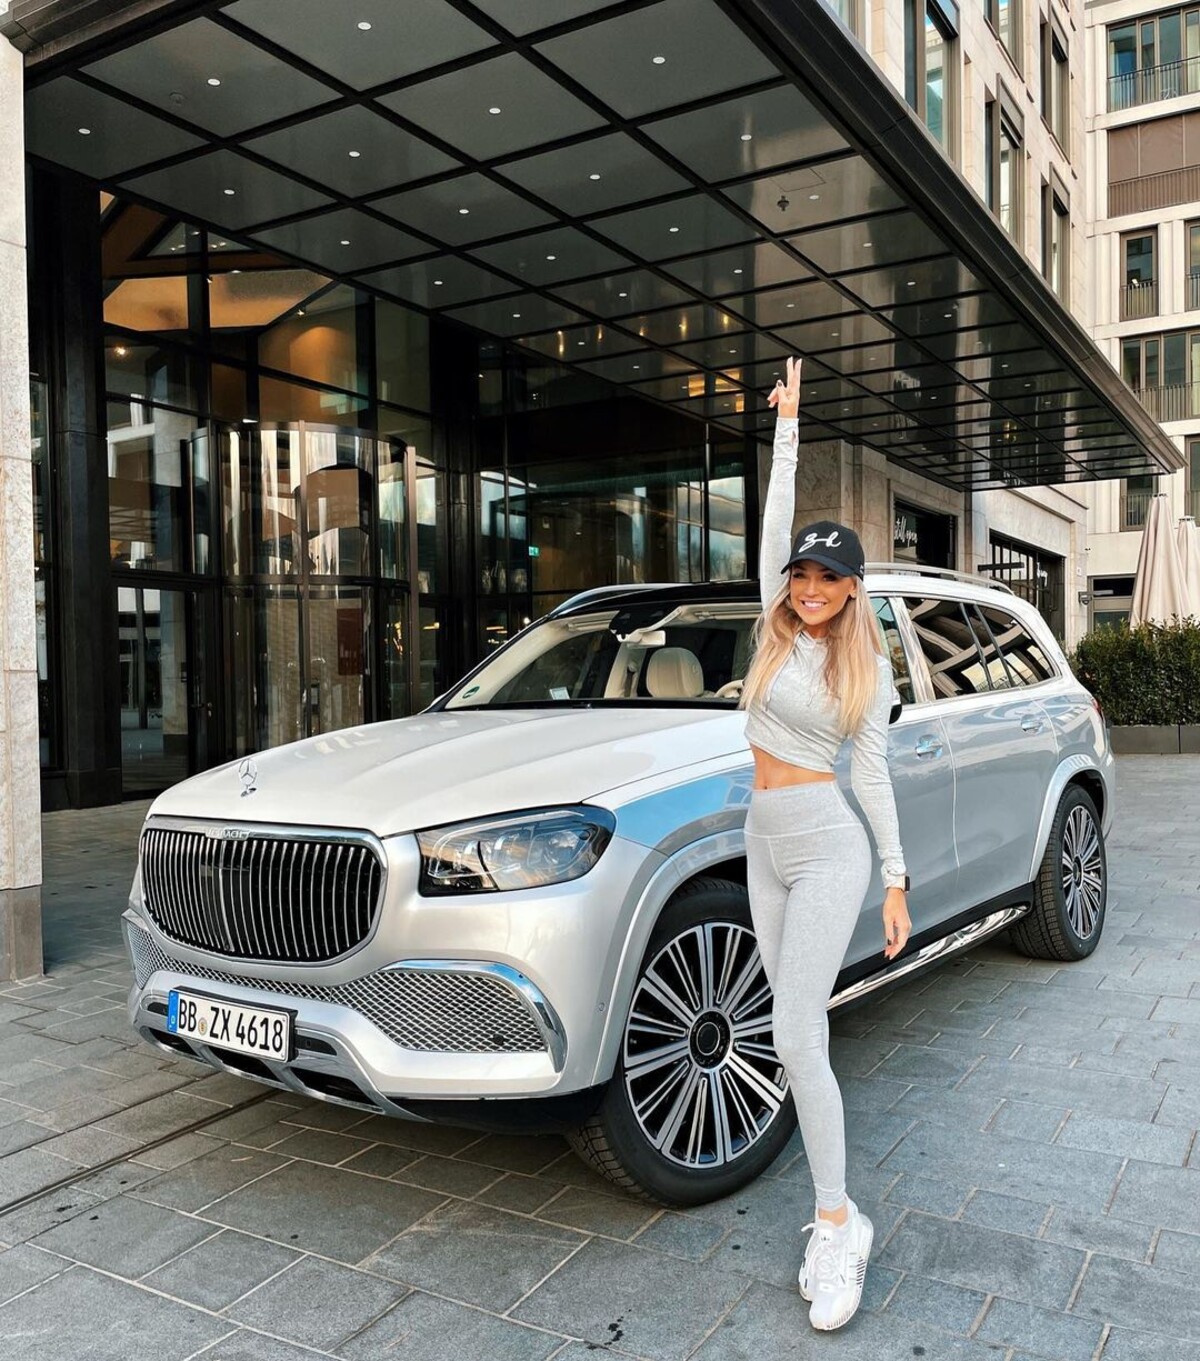 Dubaj
luxusné autá
influencerka
Inka Lackovič